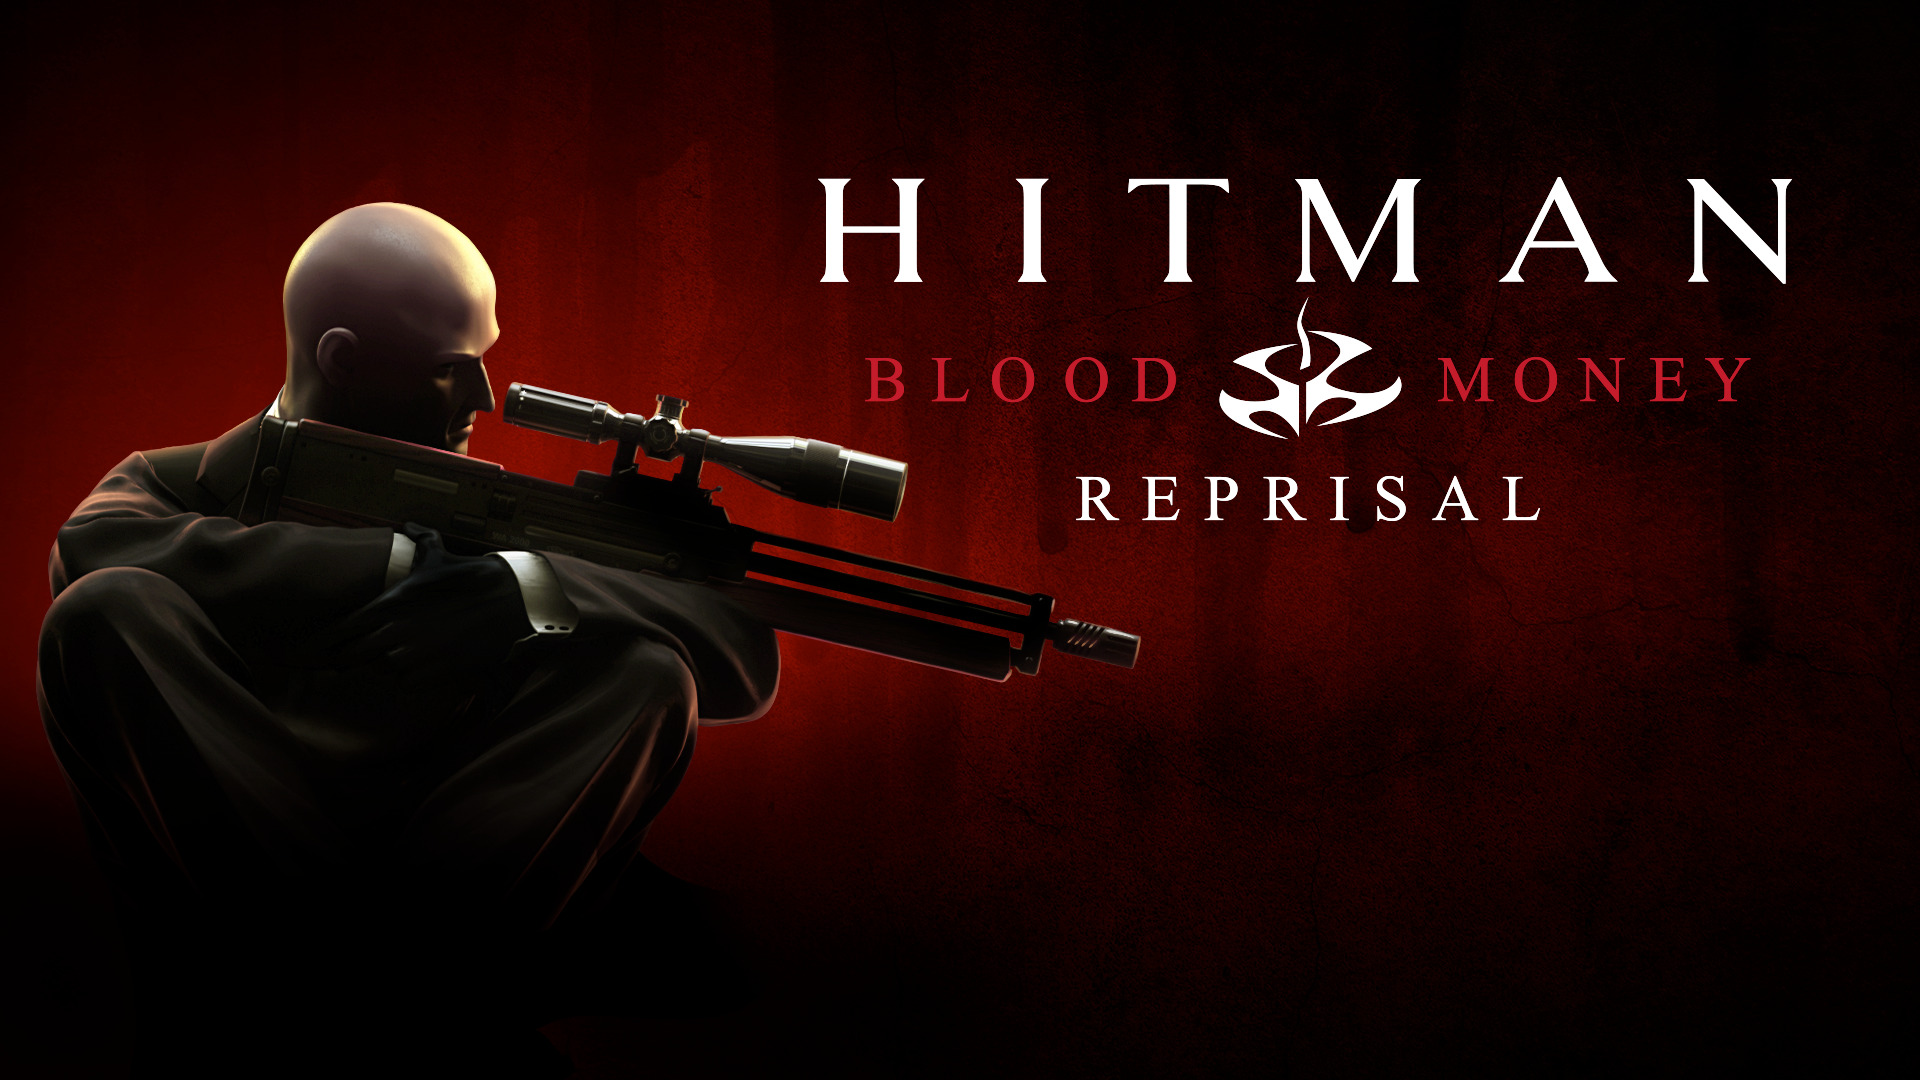 Hitman 3 se tornará Hitman World of Assassination